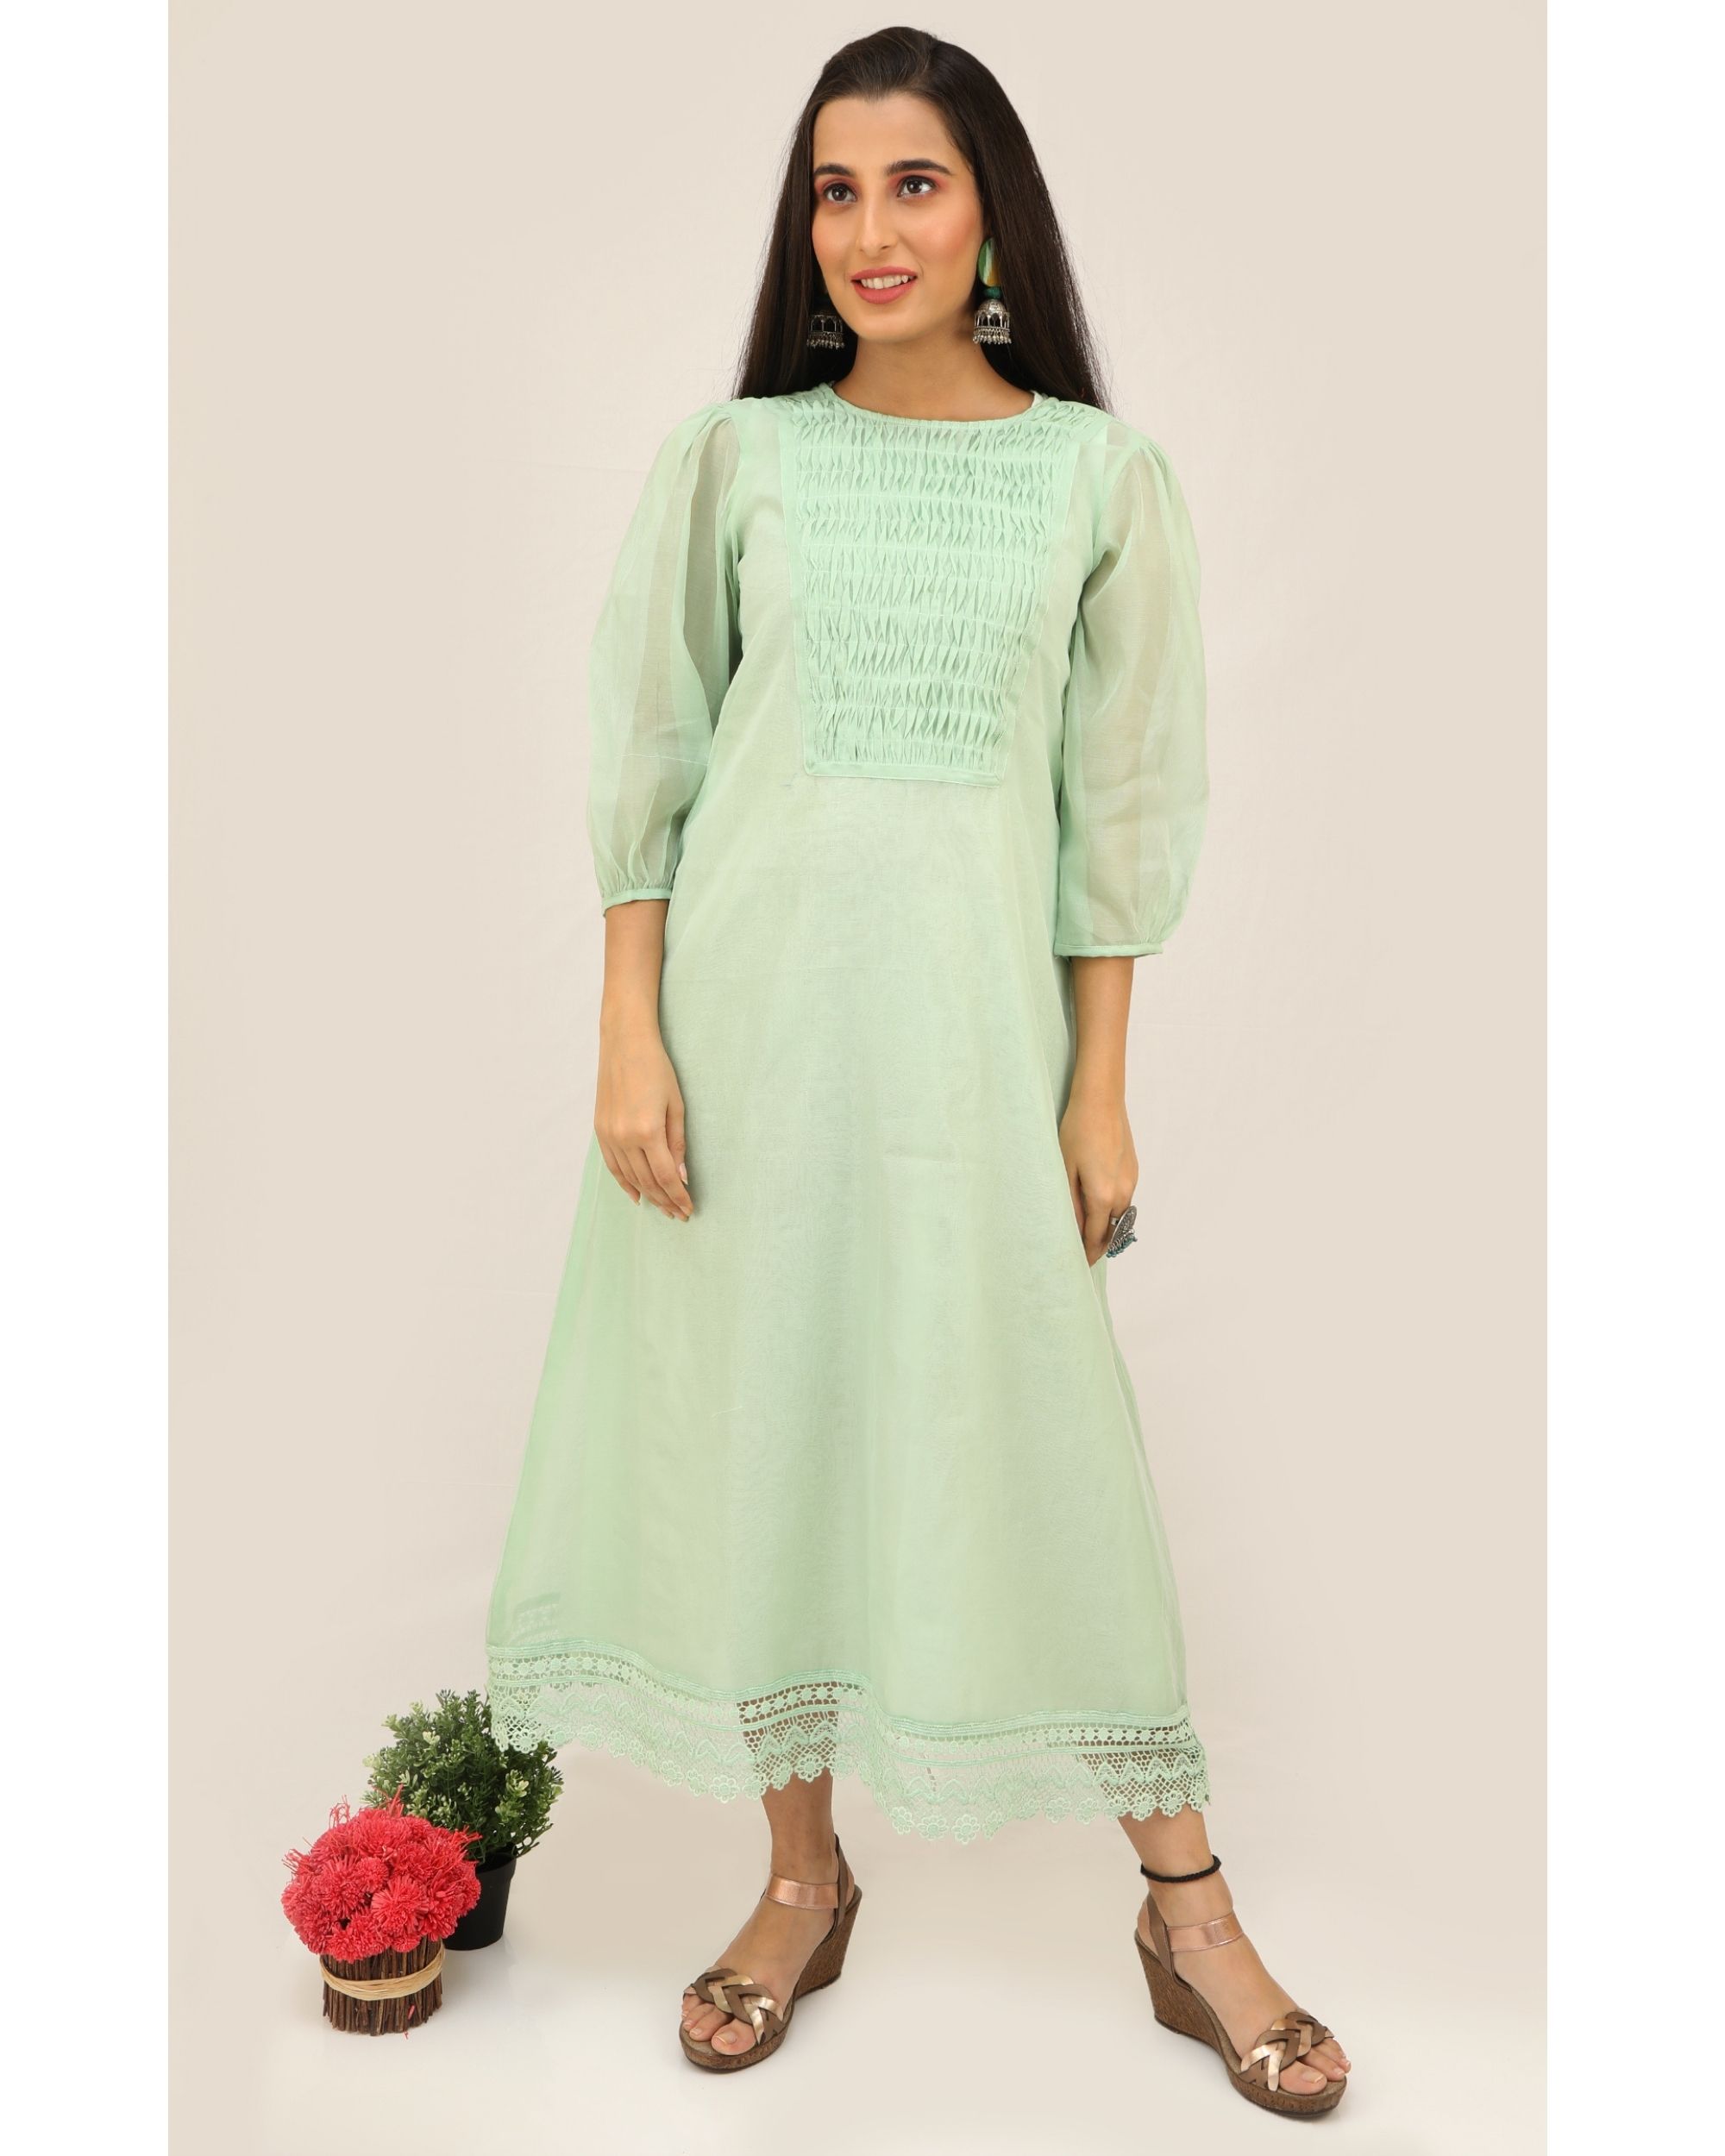 Fancy Flourecent Green Color Designer Lehenga Choli Buy Now – Joshindia